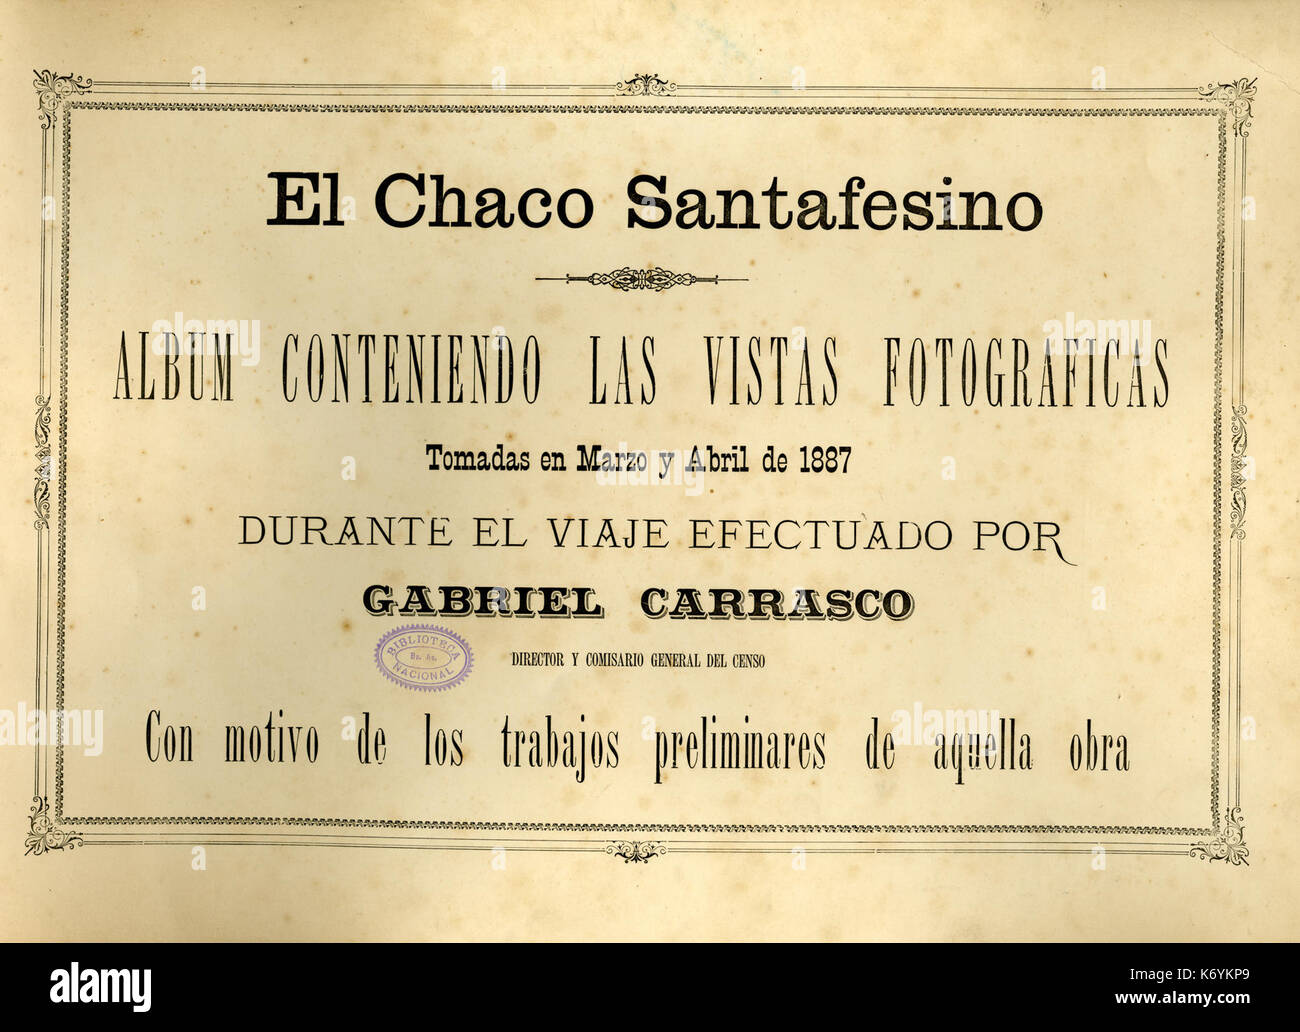 El Chaco Santafesino Caratula Foto Stock